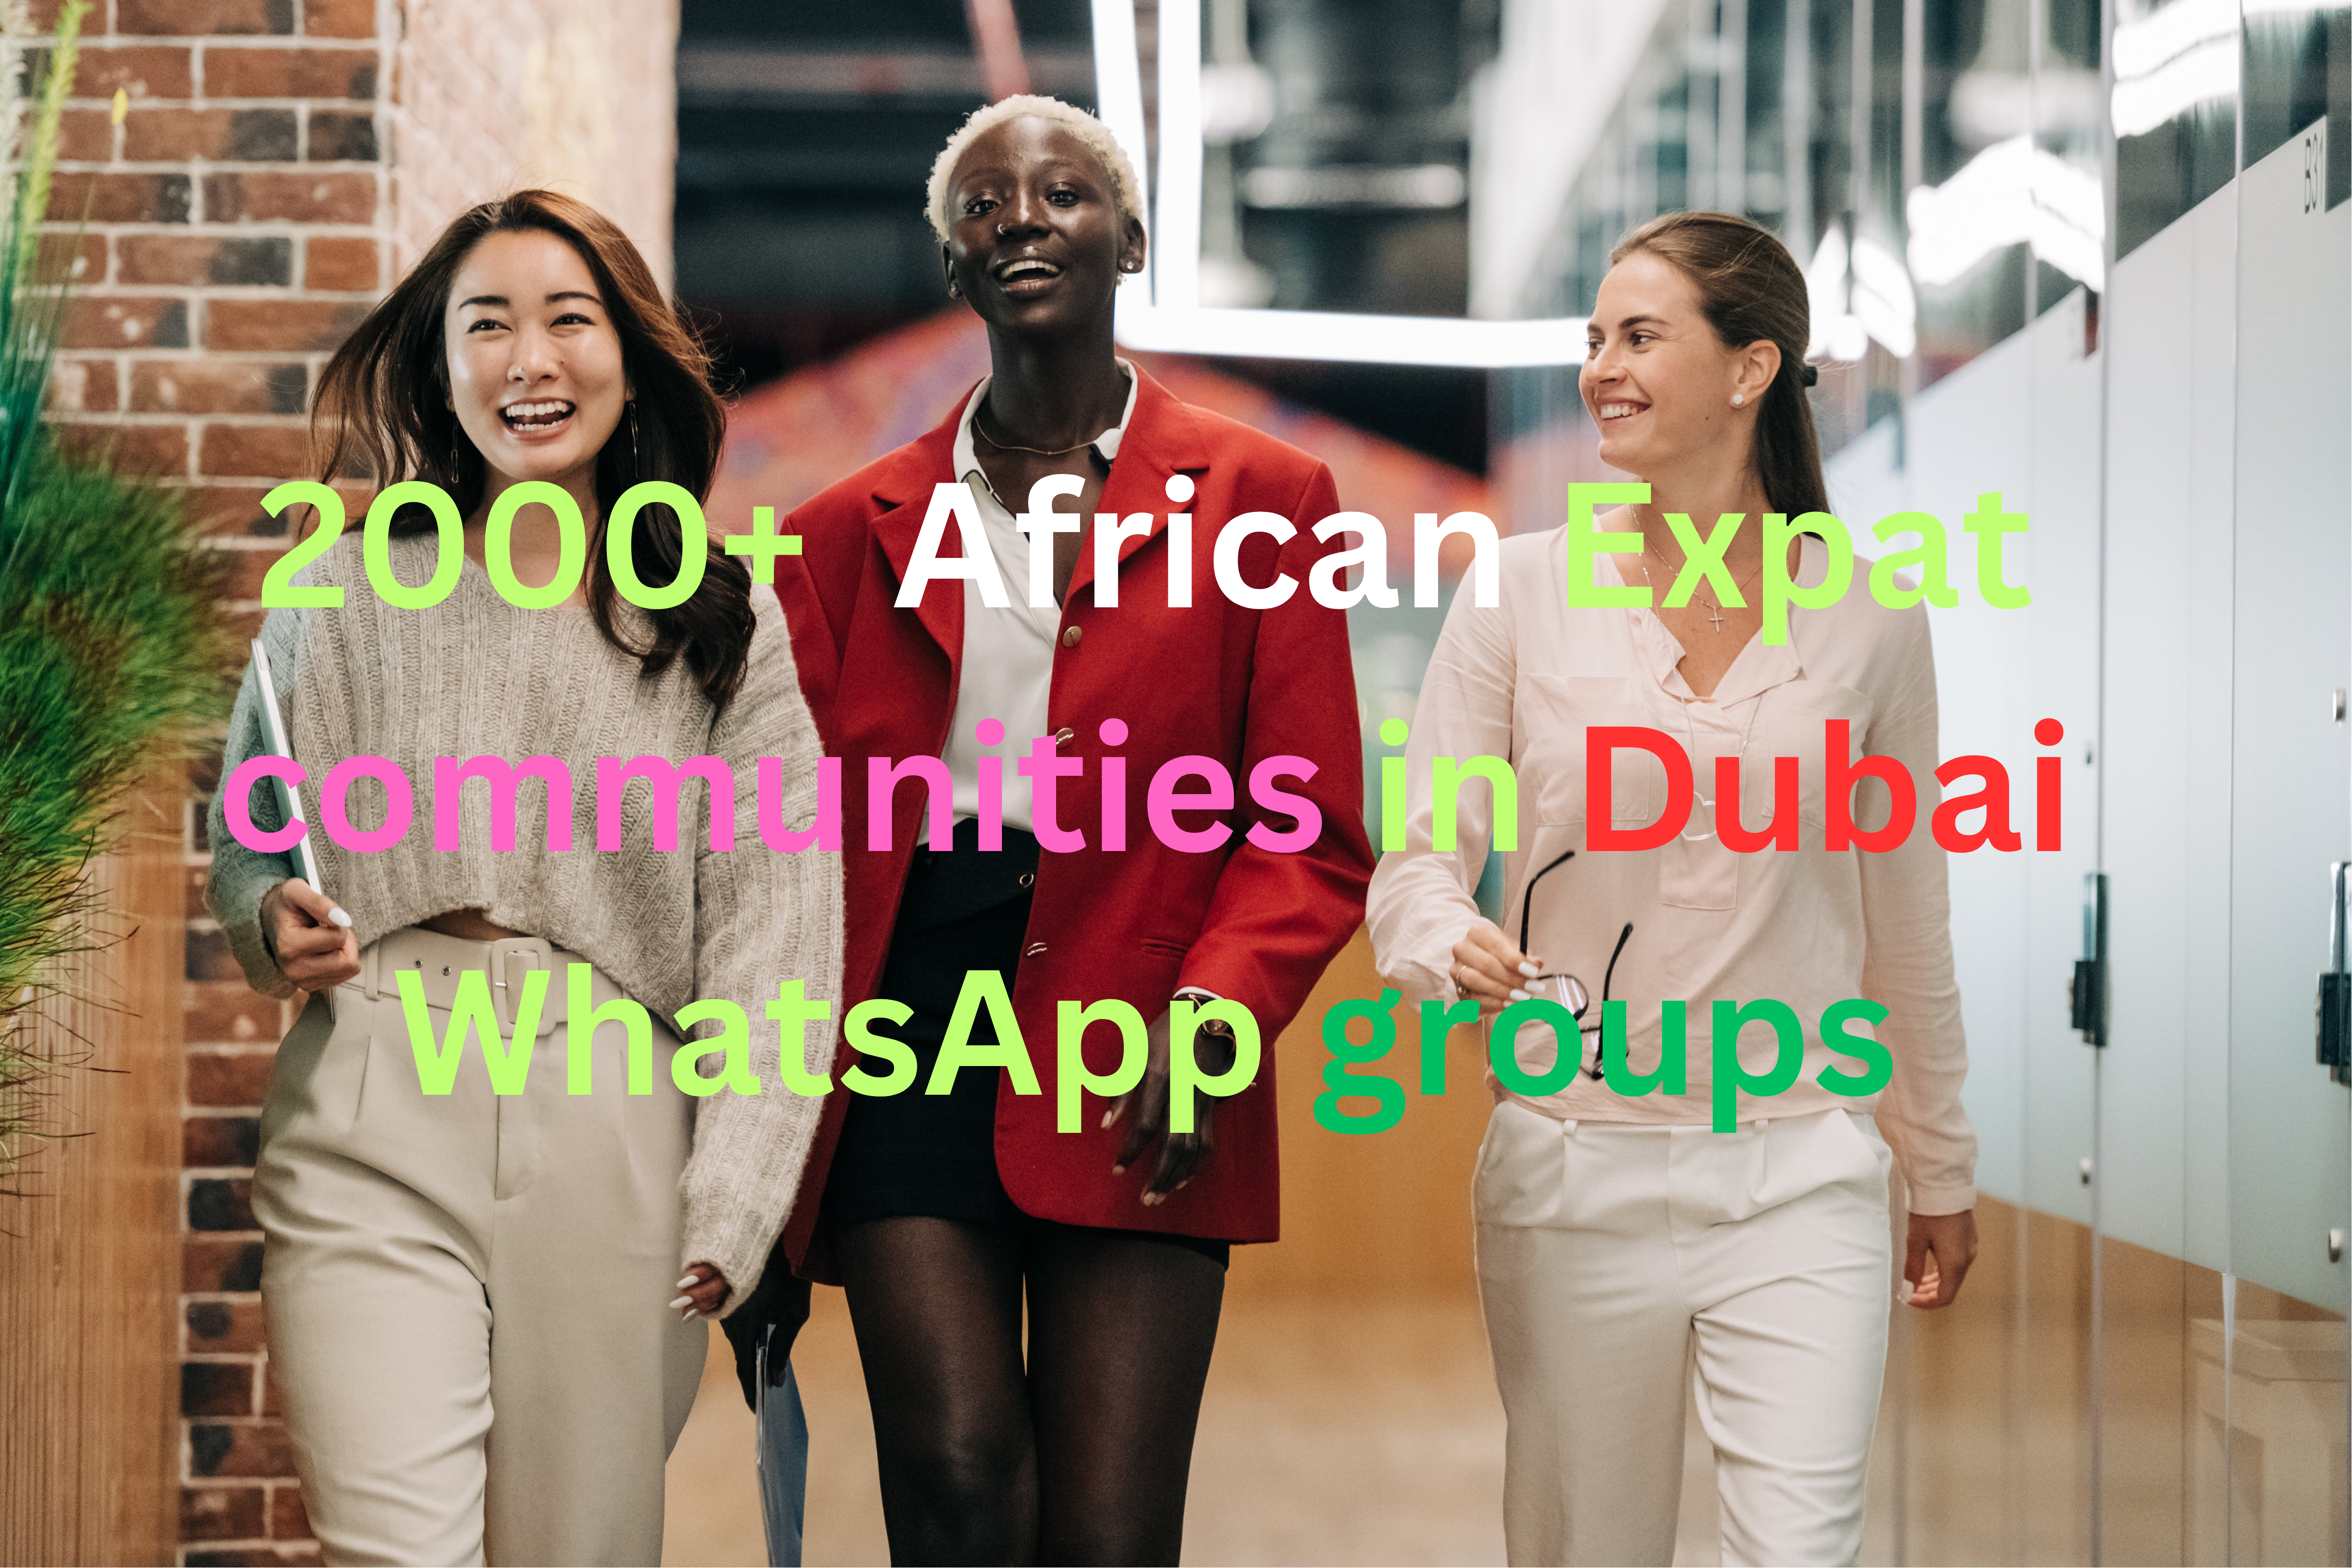 2000+  African Expat communities in Dubai WhatsApp groups